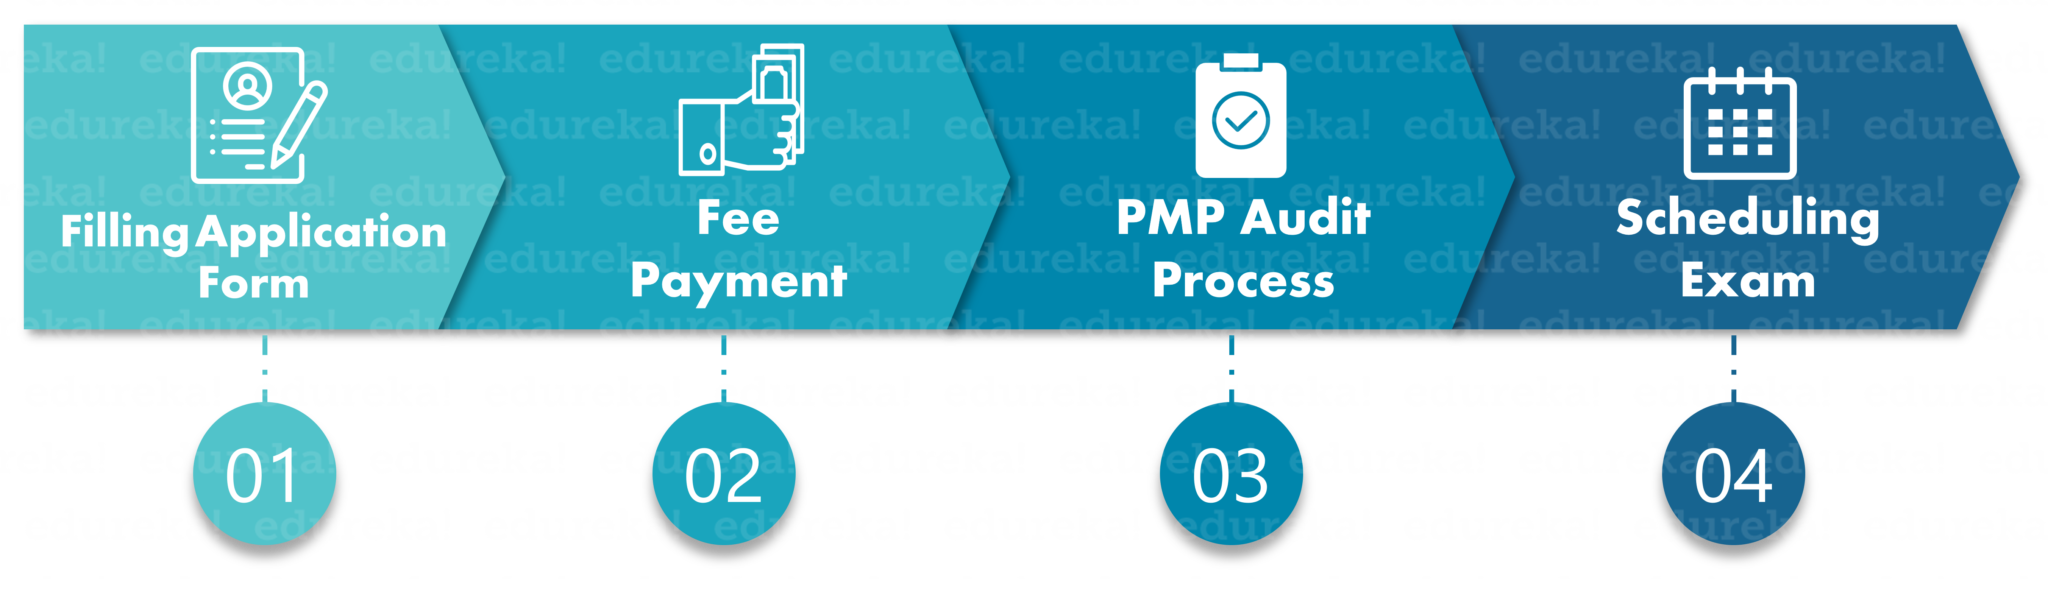 Application Procedure - PMP Exam - Edureka